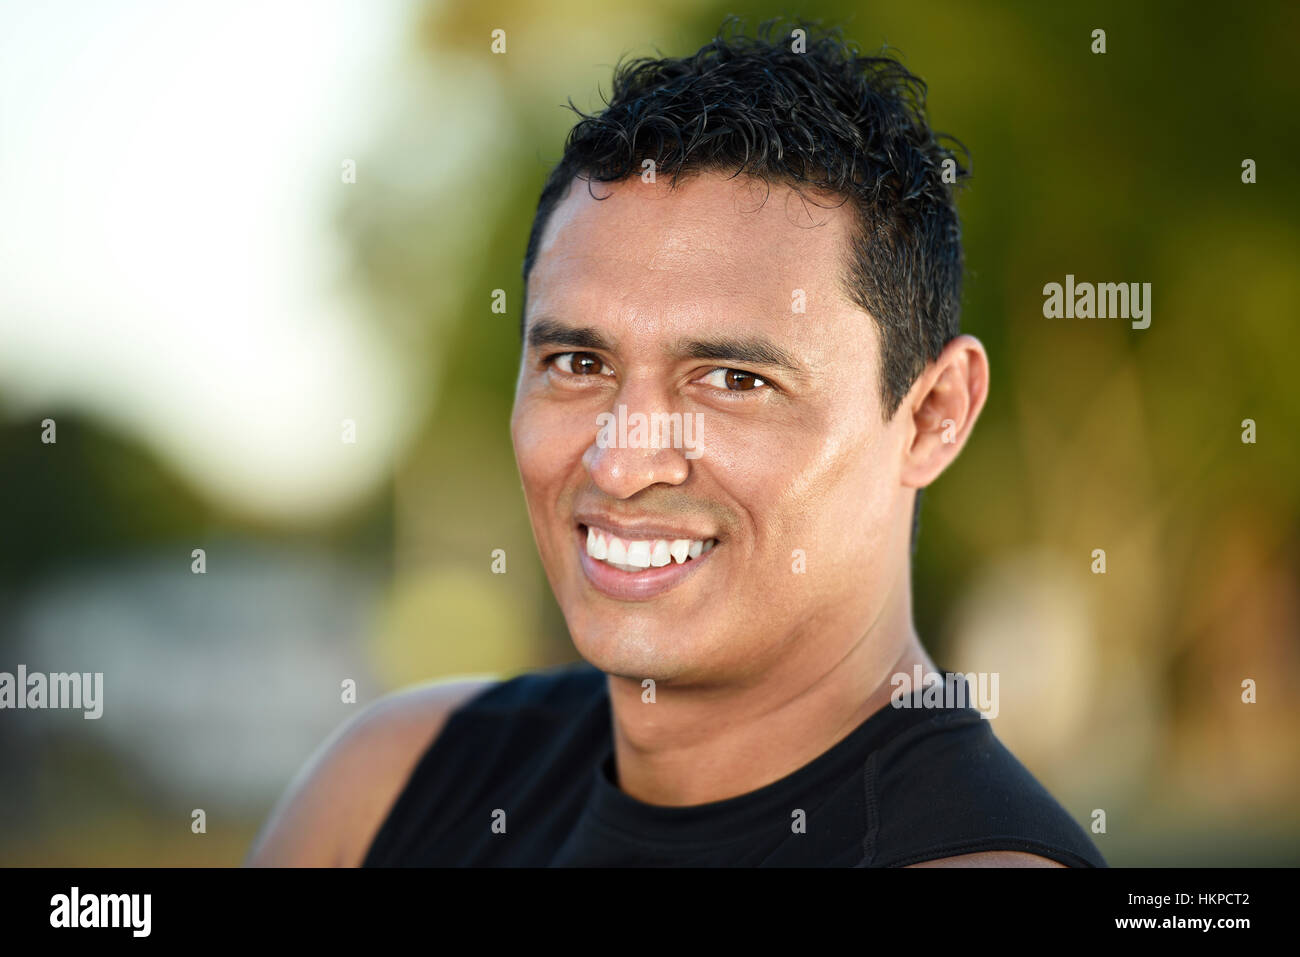 sporty smile fresh man portrait on green background Stock Photo